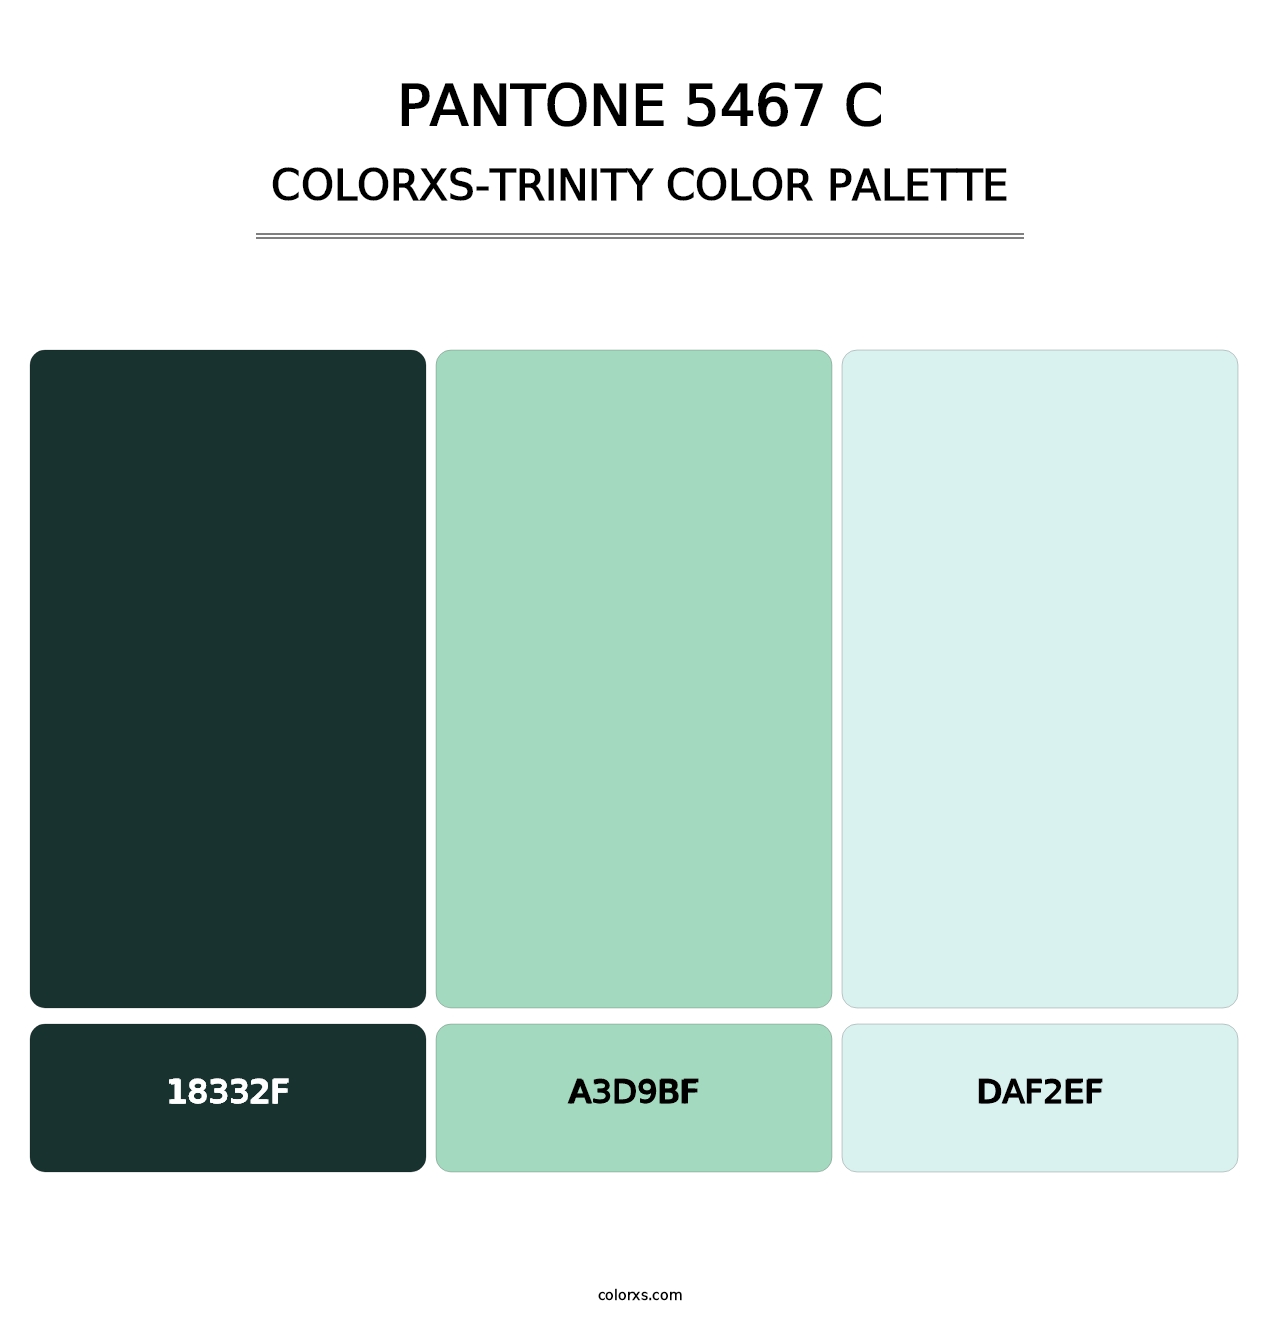 PANTONE 5467 C - Colorxs Trinity Palette